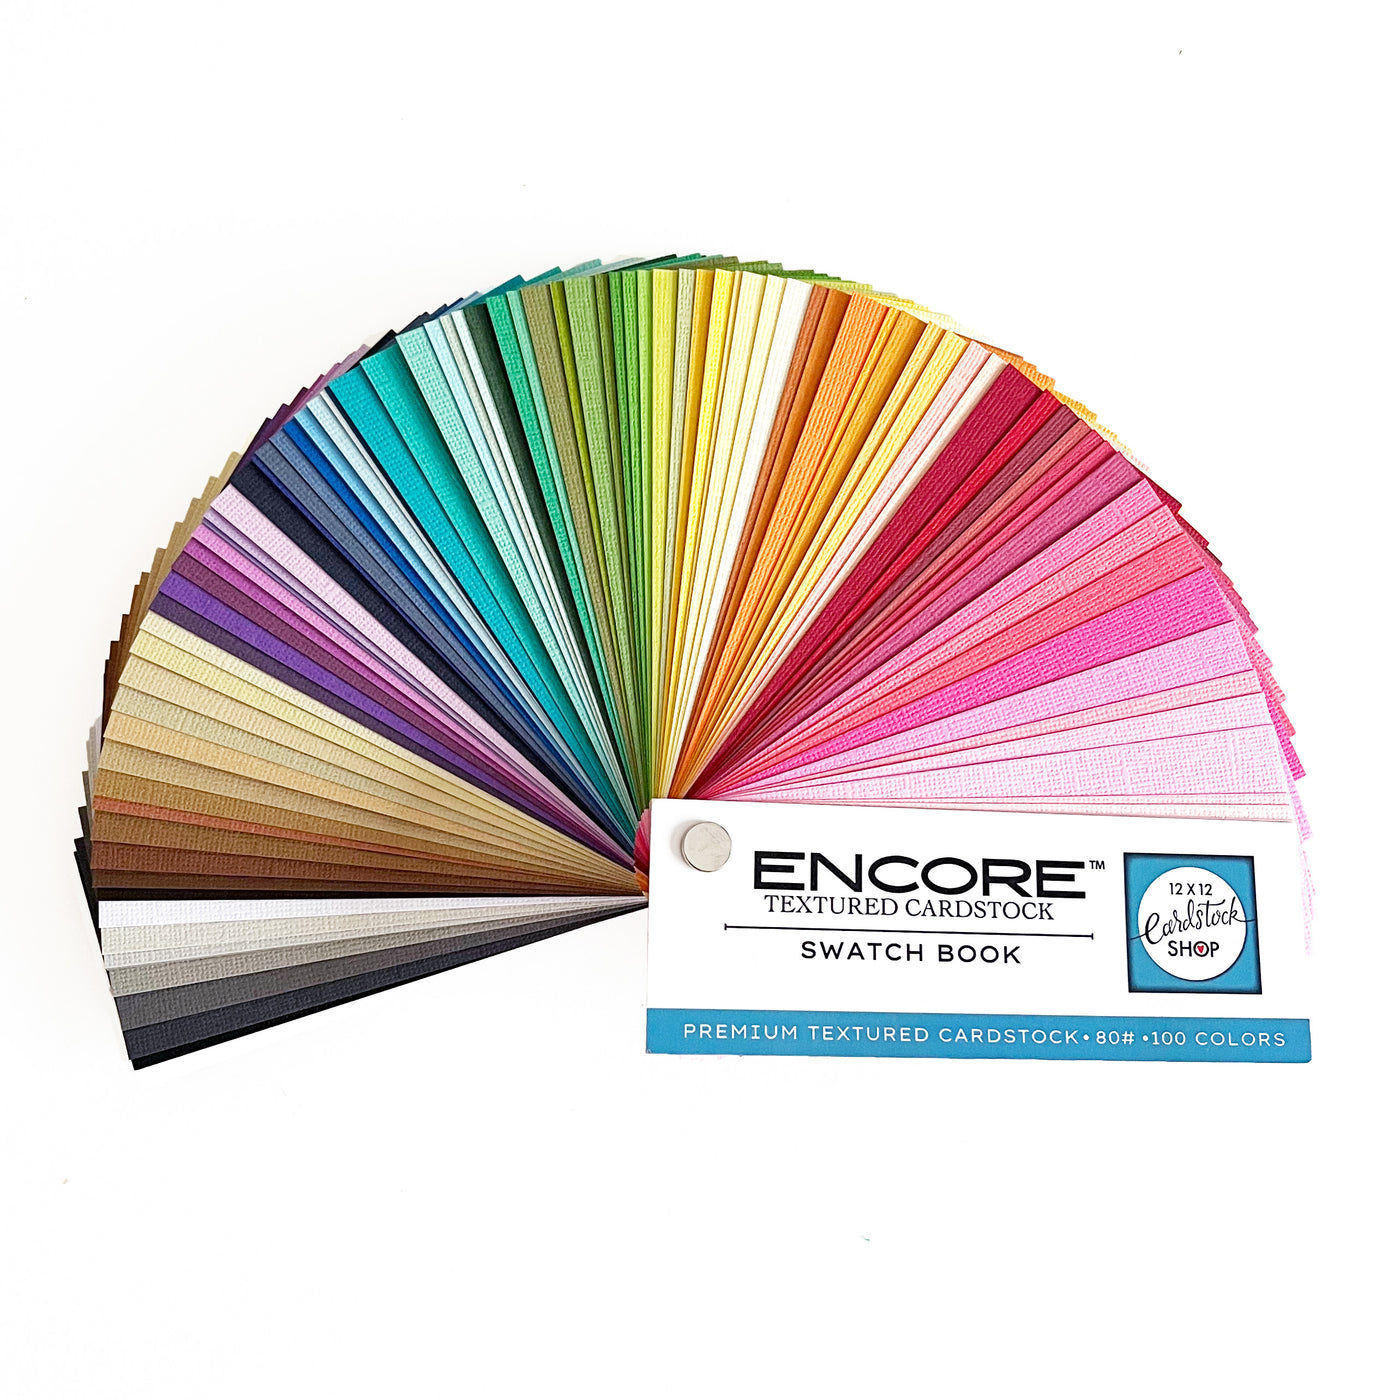 Encore Textured Cardstock Swatch Book - Encore